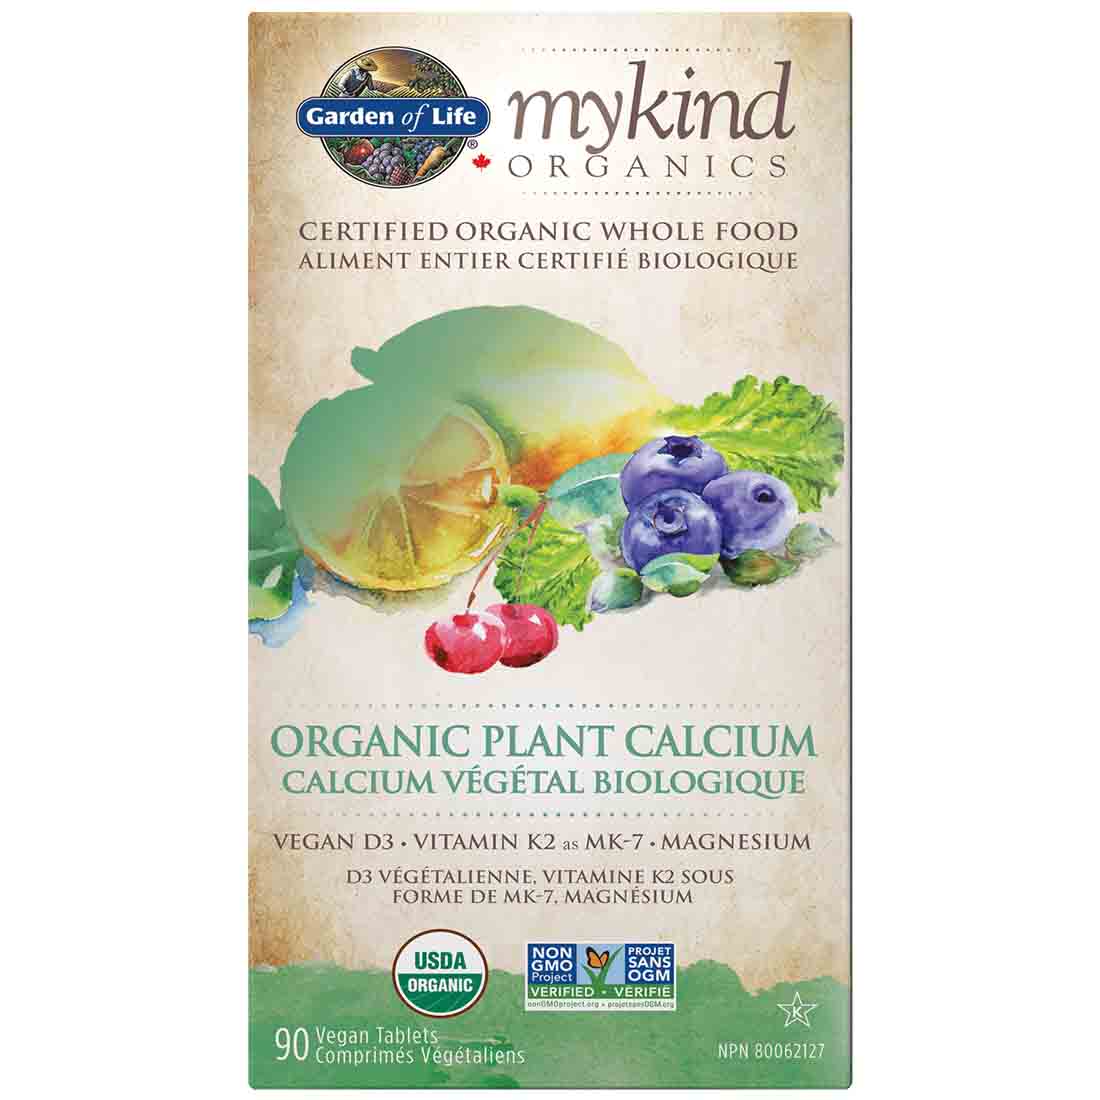 Garden of Life mykind Organics - Organic Plant Calcium, 90 Vegan Tablets